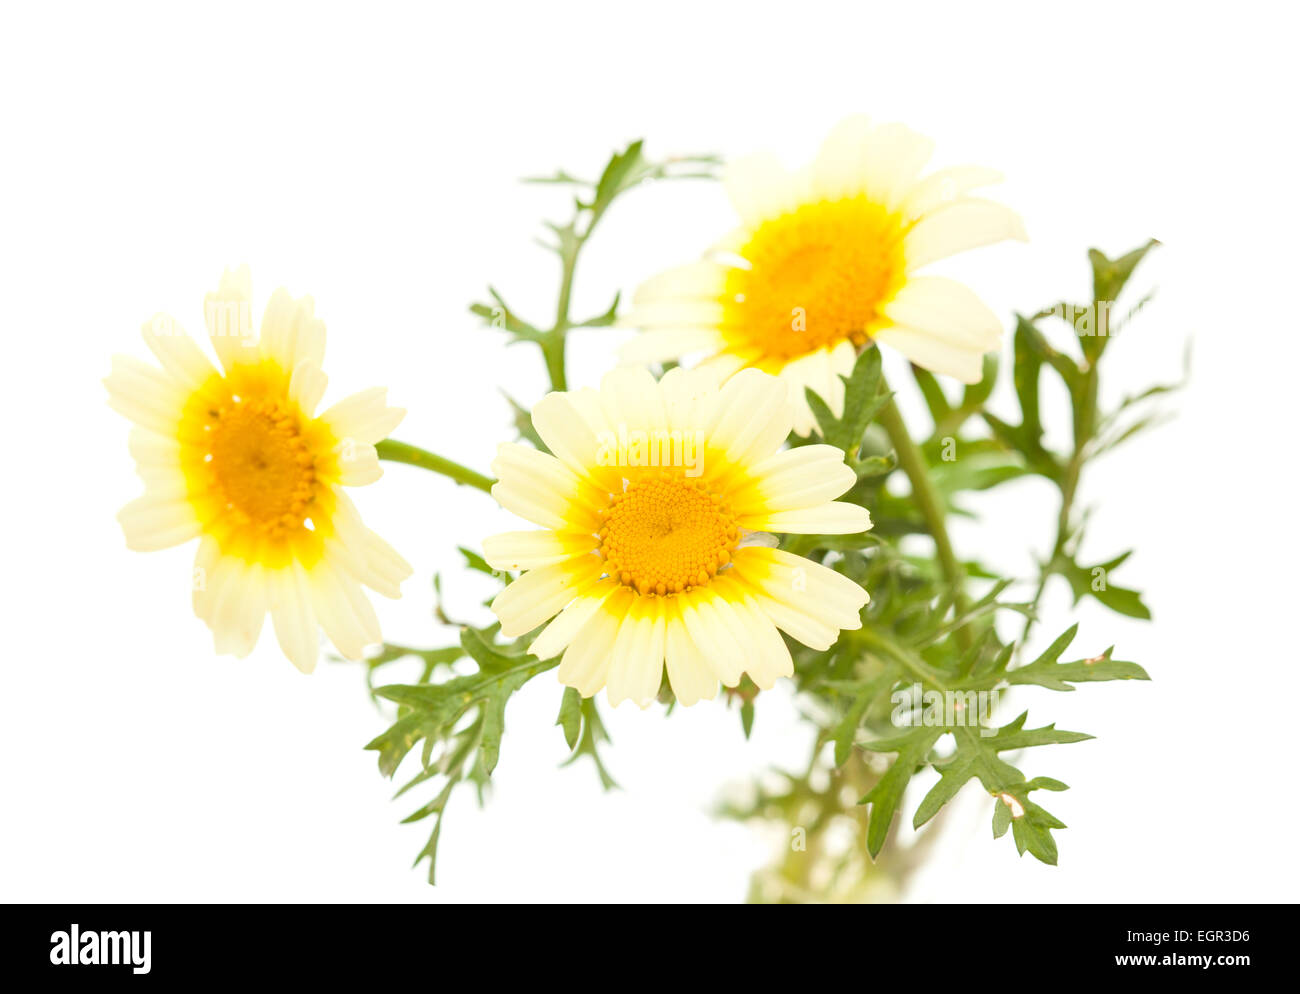 All-yellow Garland chrysanthemum isolated on white background Stock Photo